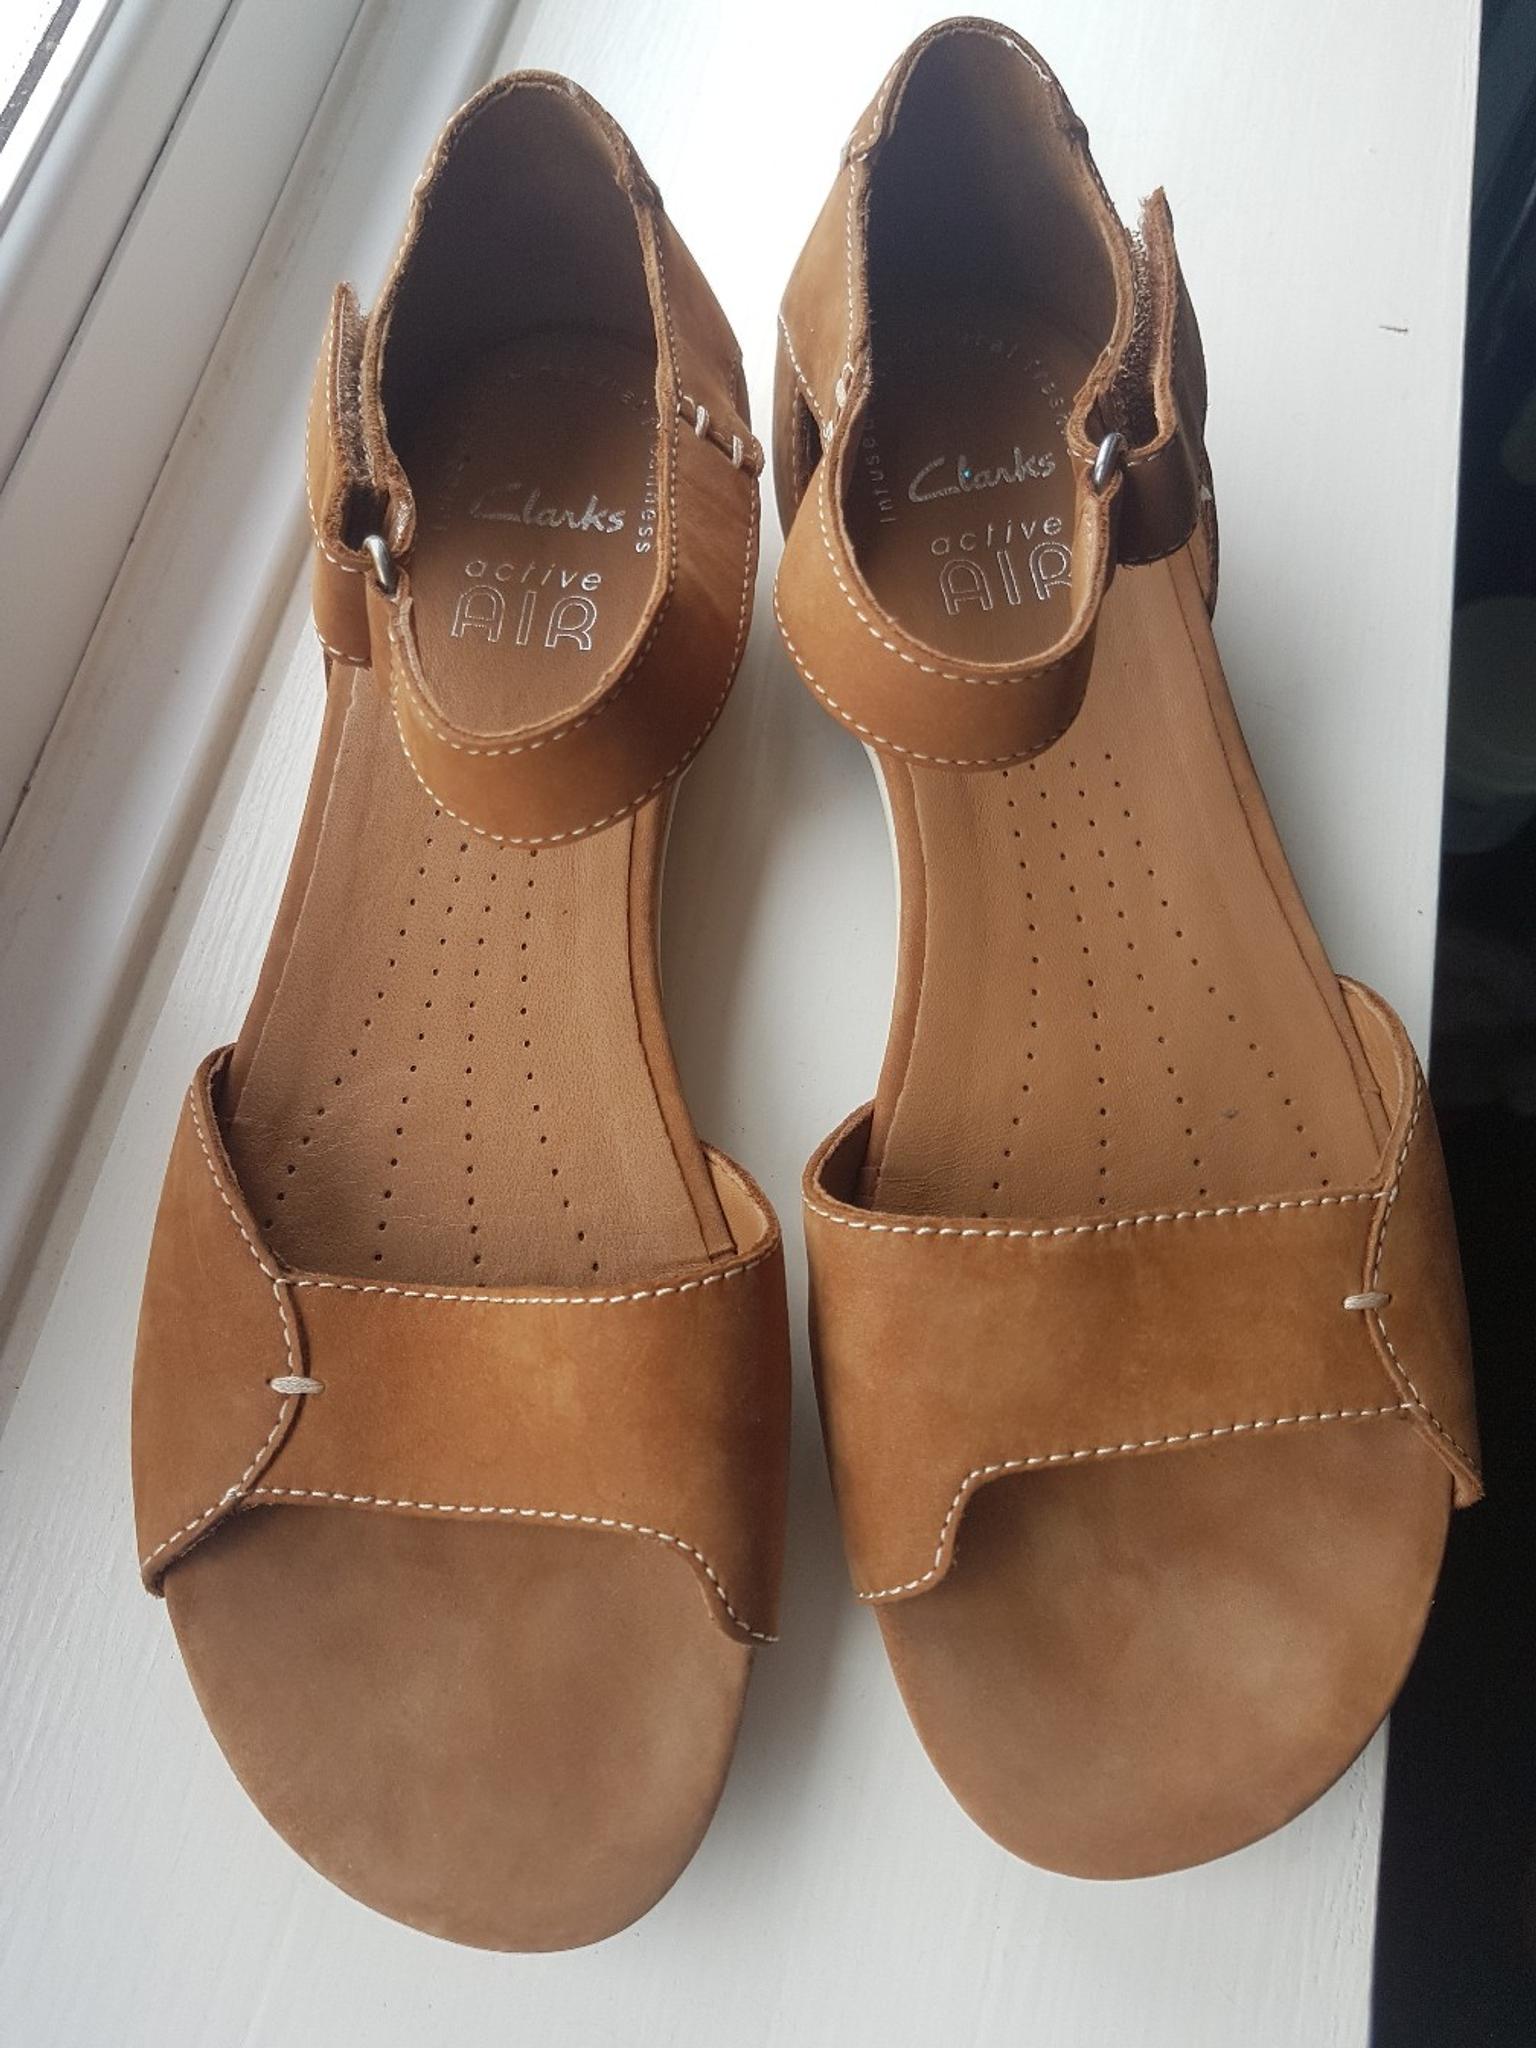 clarks ladies leather sandals